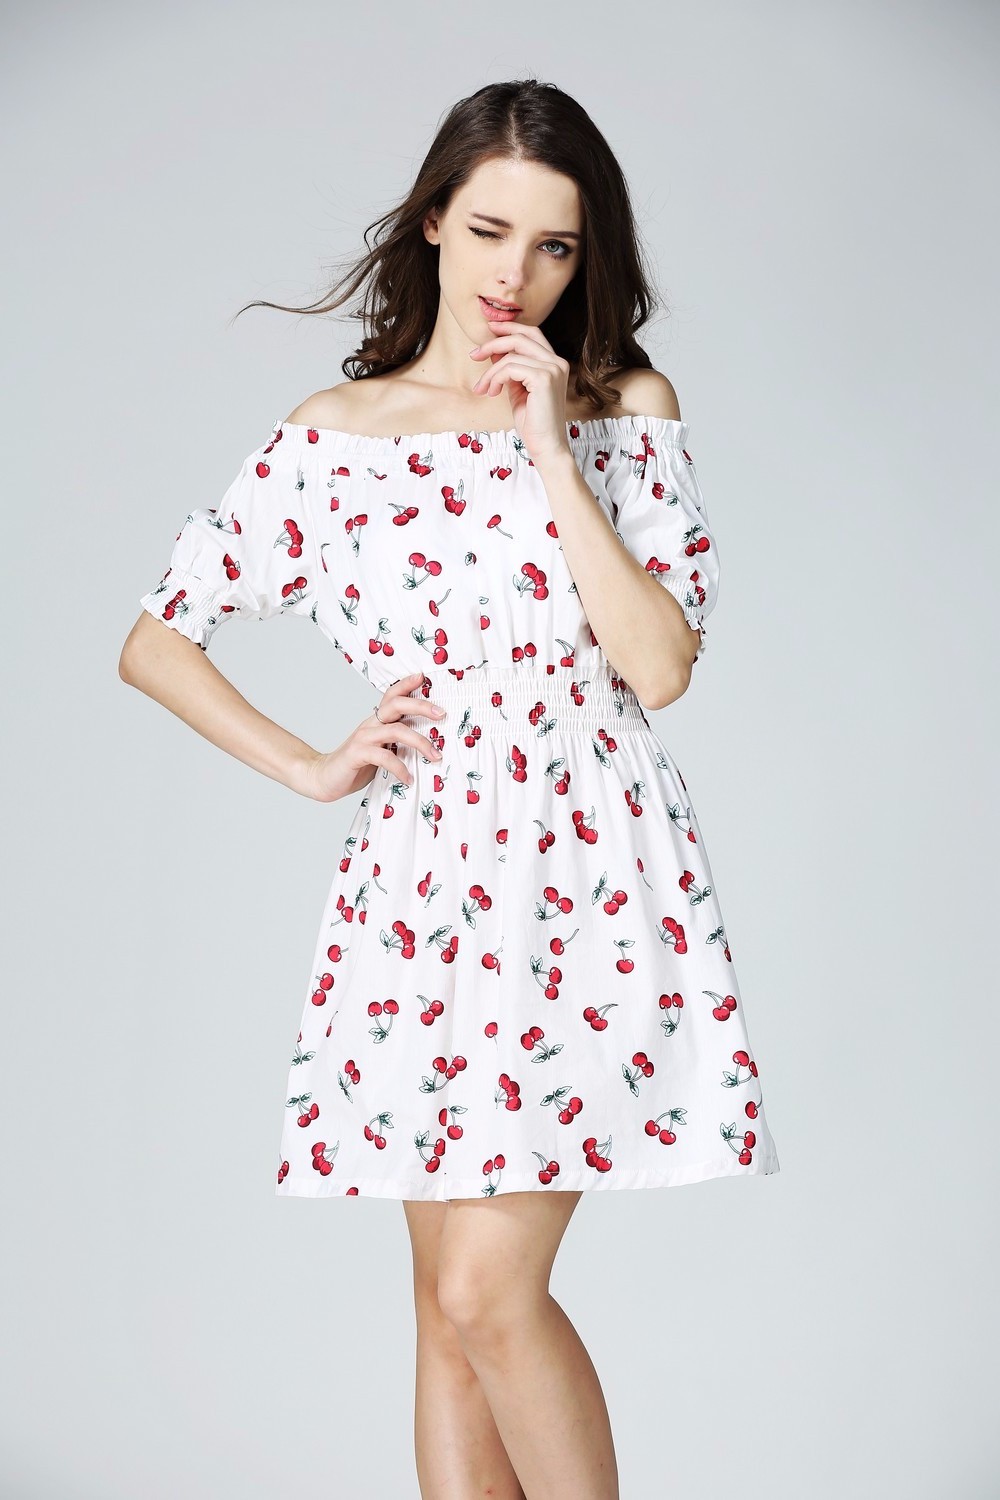 Cherry Print Dress Style Limits